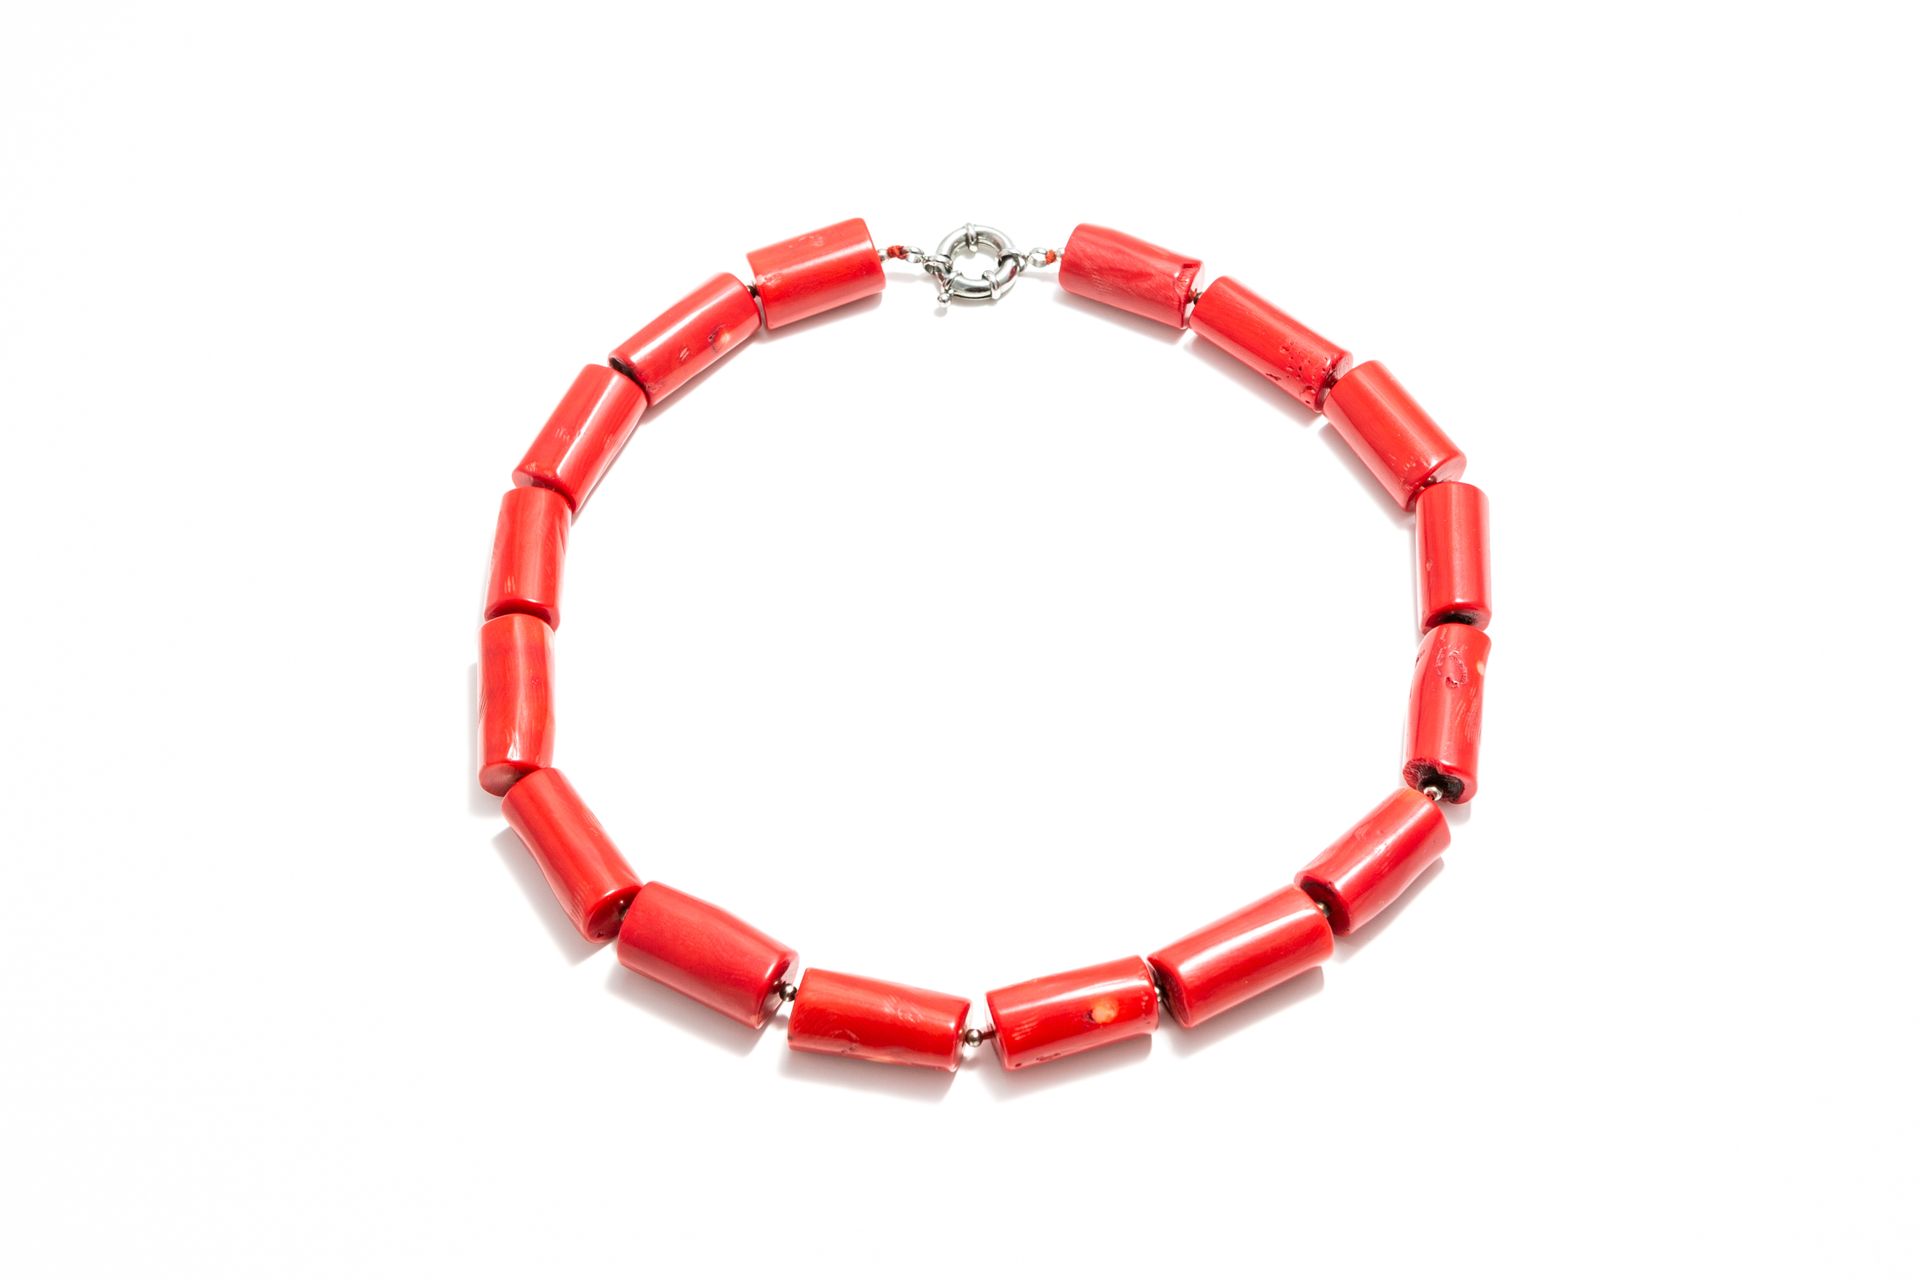 Null 由圆柱形的红珊瑚片安装在红线上并夹杂着一个镀银球制成的项链

毛重：163.5克。